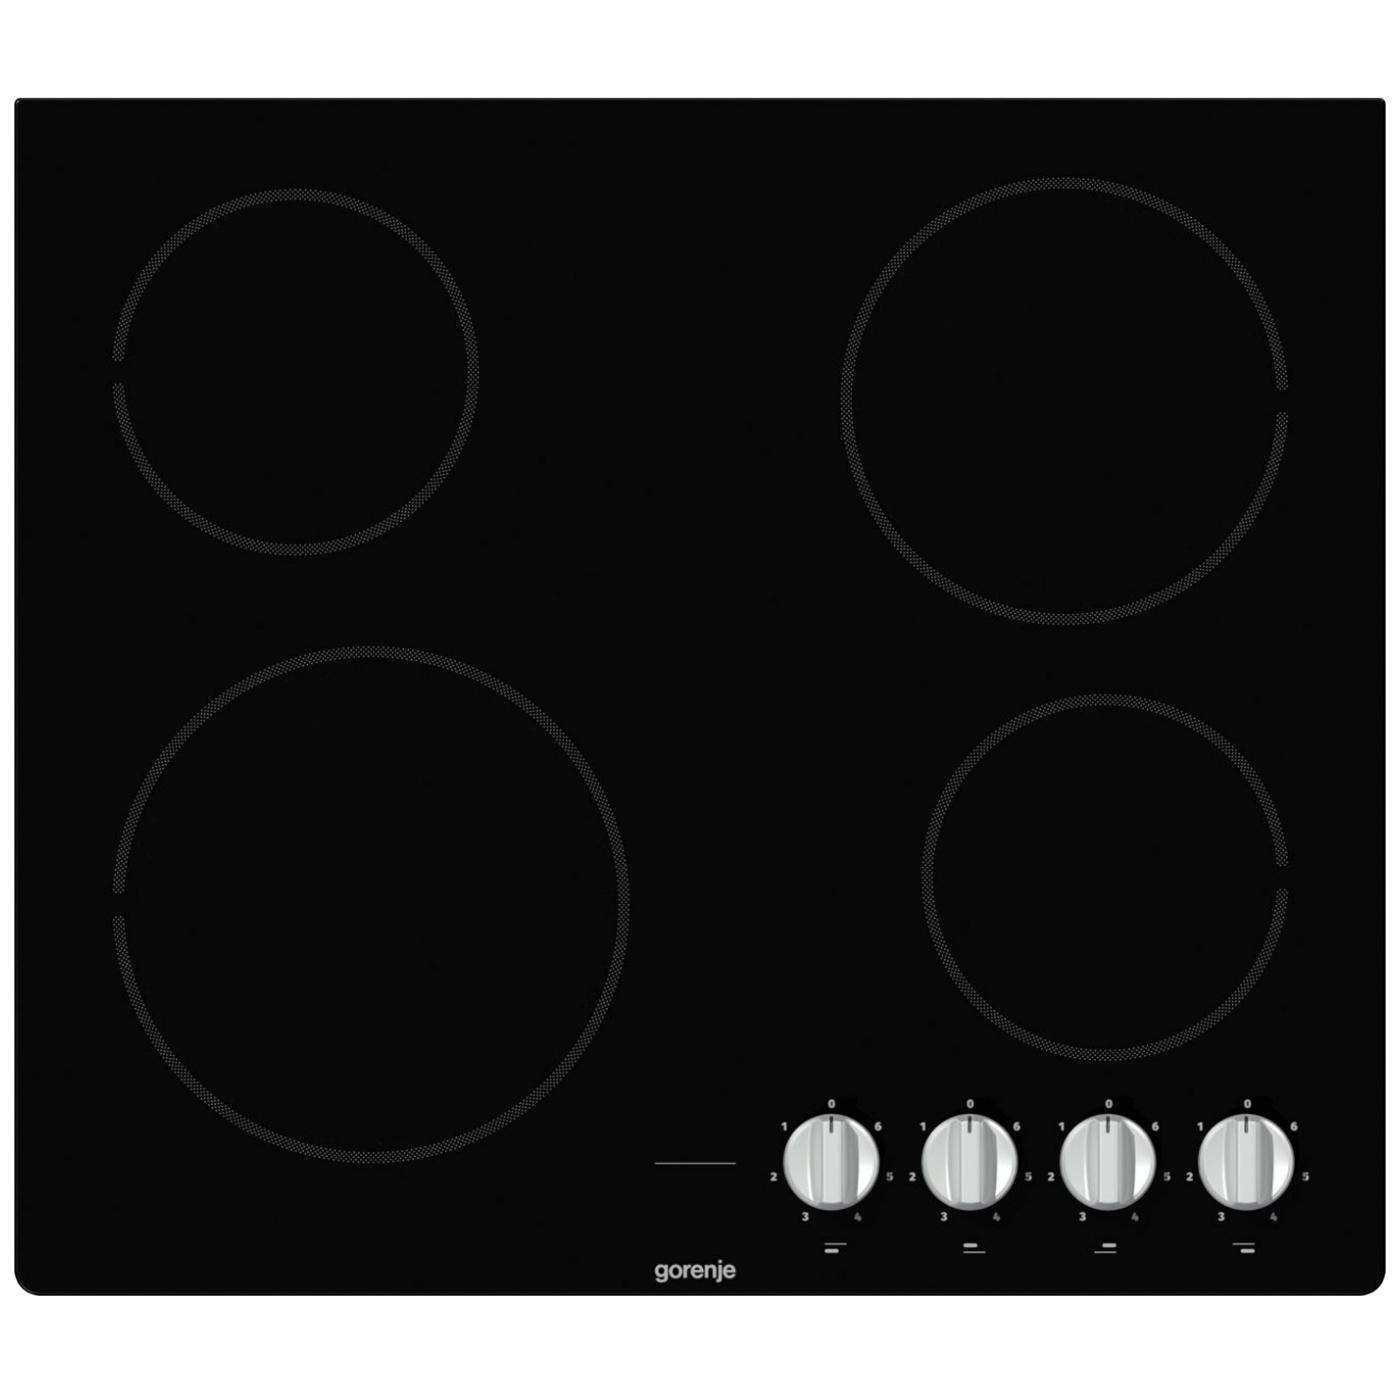 Staklokeramička ploča za kuhanje, 6200W